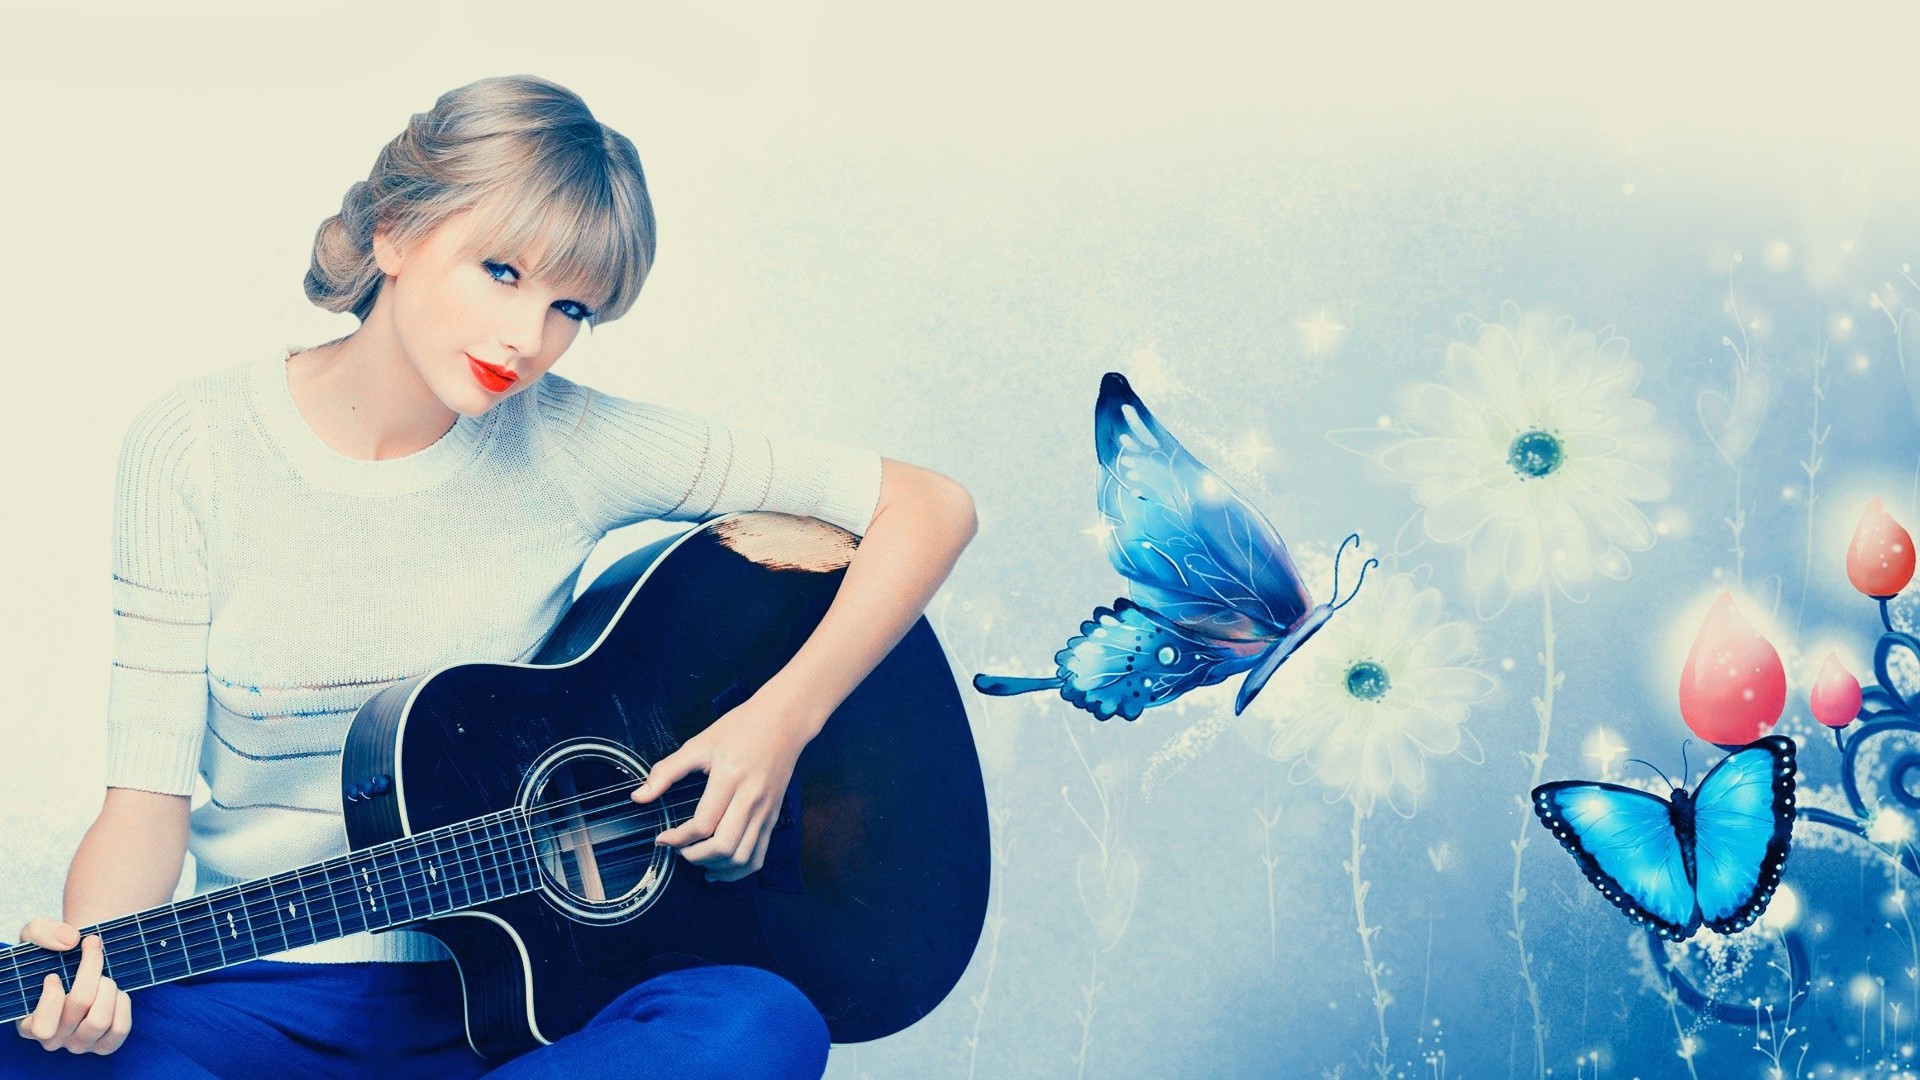 Taylor Swift Women Music Faces Bangs